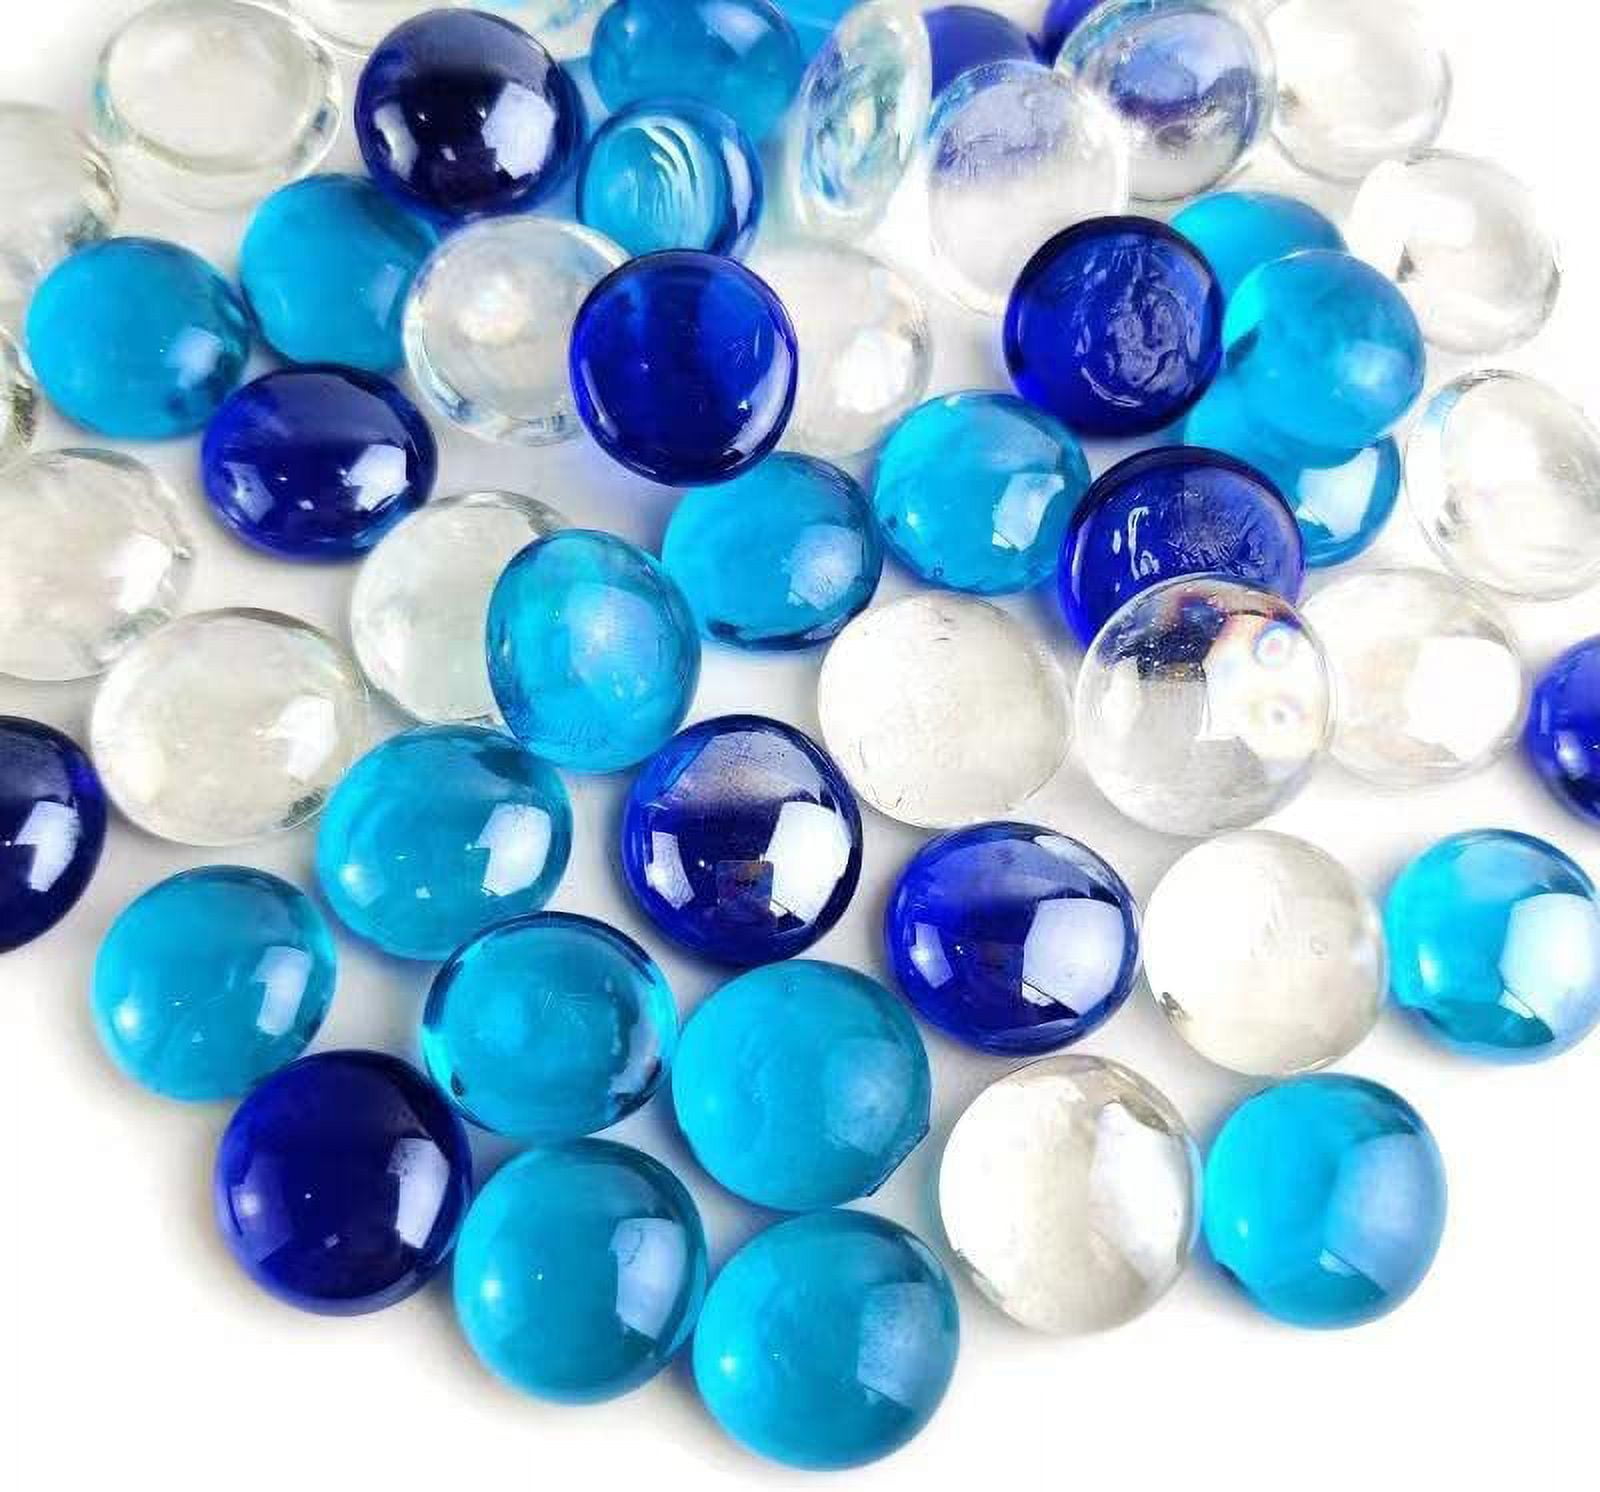  FUTUREPLUSX 1LB Multicolored Flat Glass Marbles, Mixed Mancala  Stones Pebbles Flat Beads Mosaics Gemstones for Vase Filler Table Scatter  Home Decor : Home & Kitchen